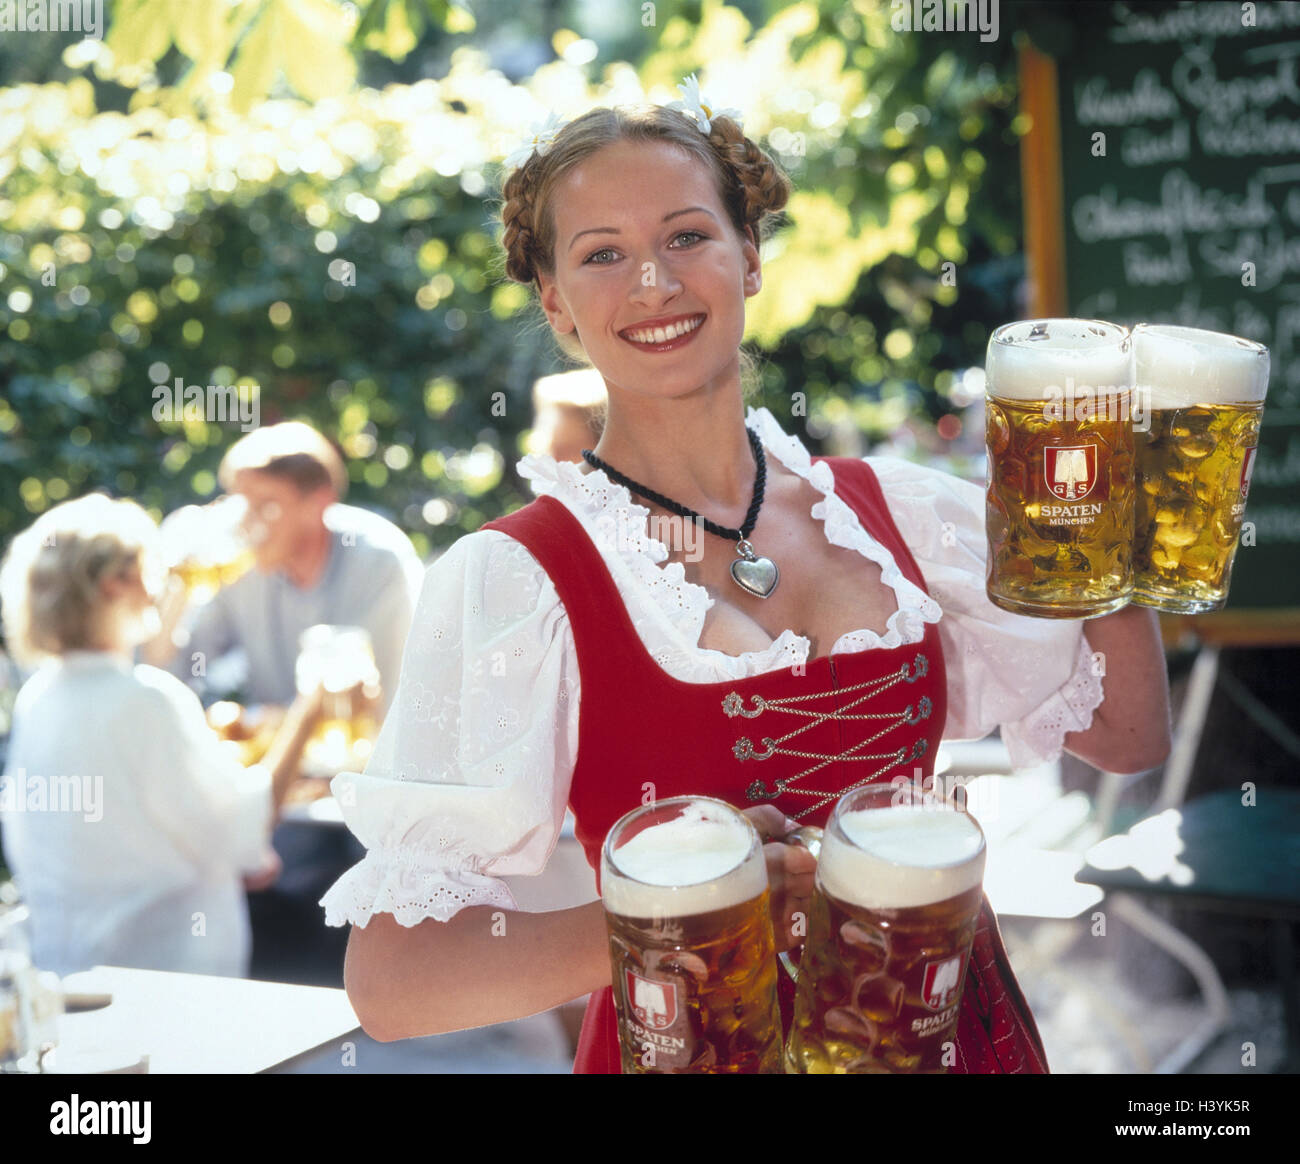 germany-bavaria-beer-garden-service-dirndl-beer-mugs-woman-young-national-H3YK5R.jpg